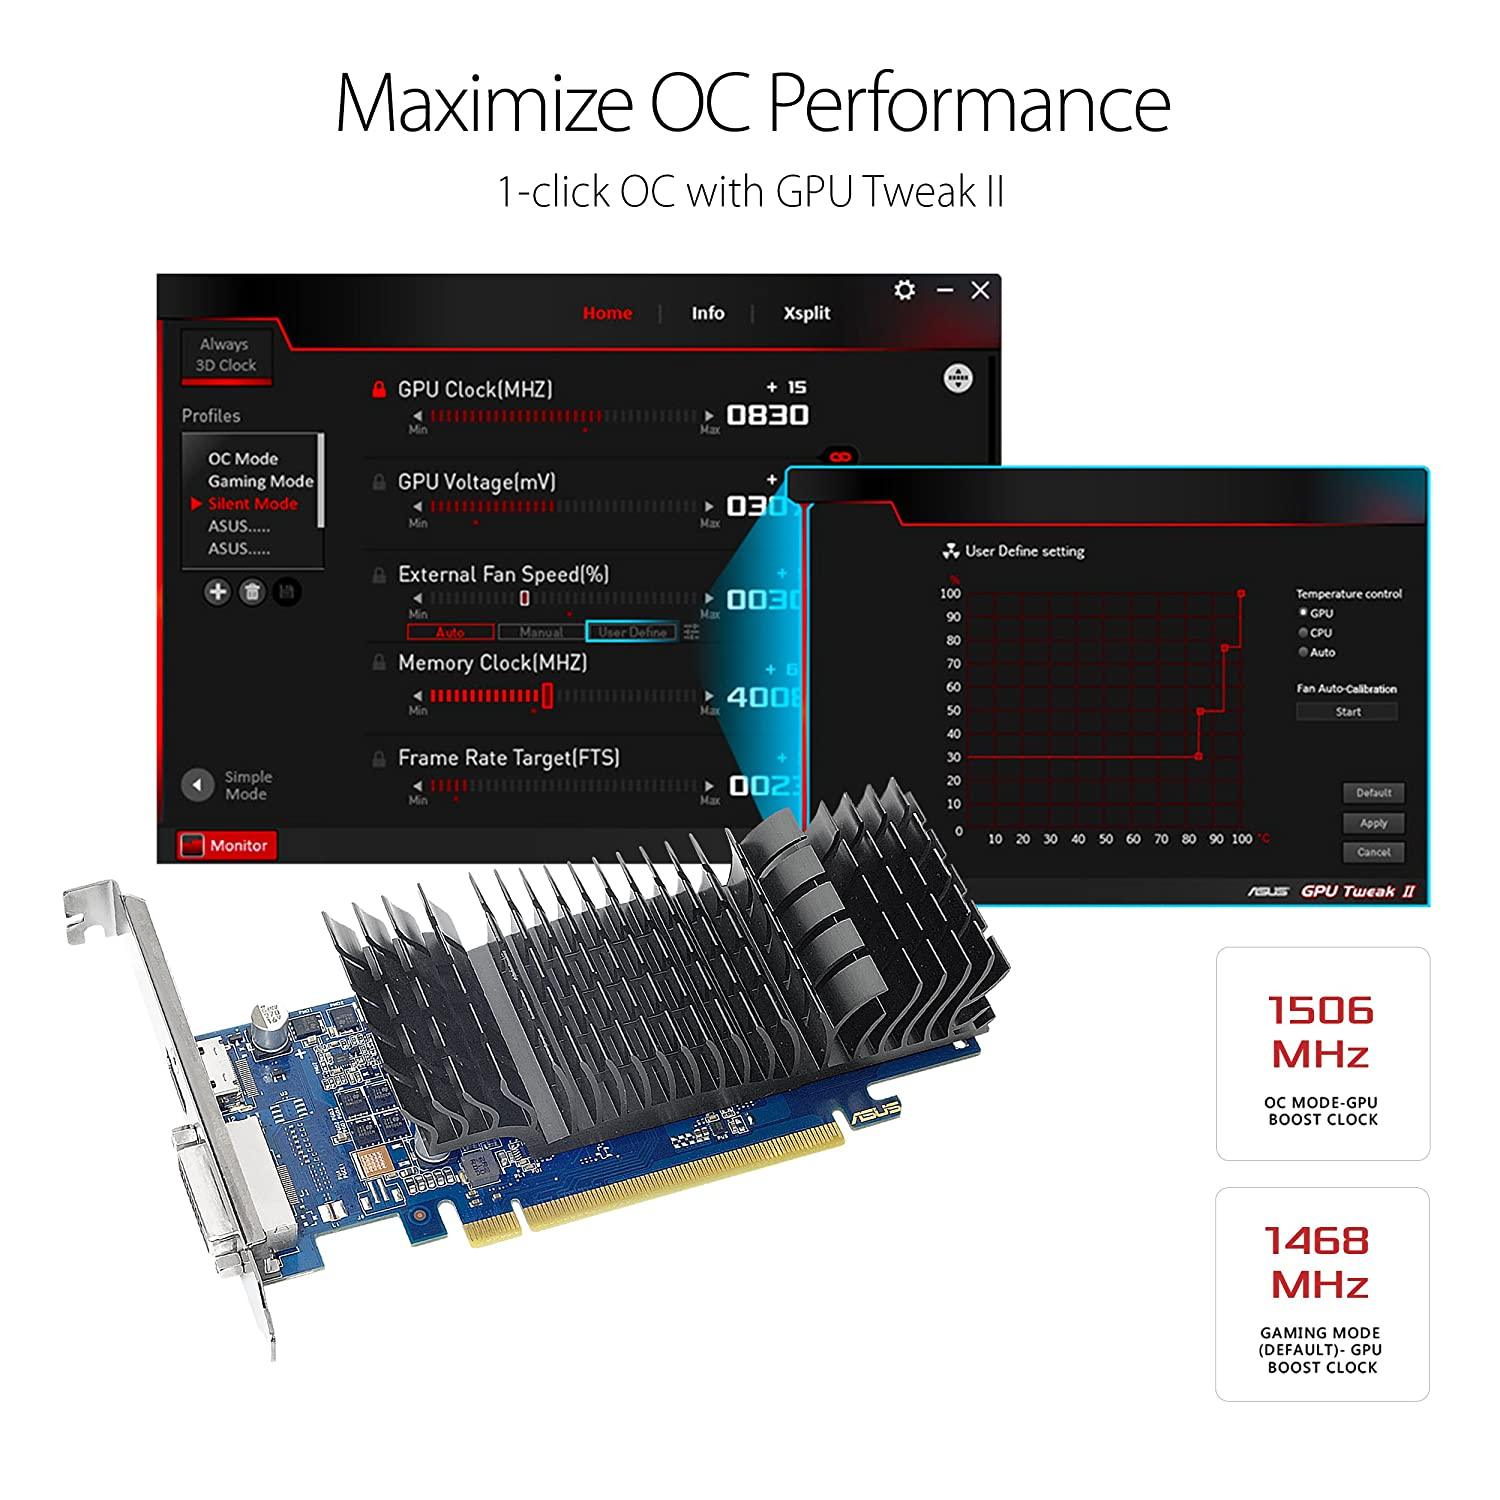 Asus GeForce GT 710 2GB GDDR5 HDMI VGA DVI Graphics Card-GRAPHICS CARD-dealsplant